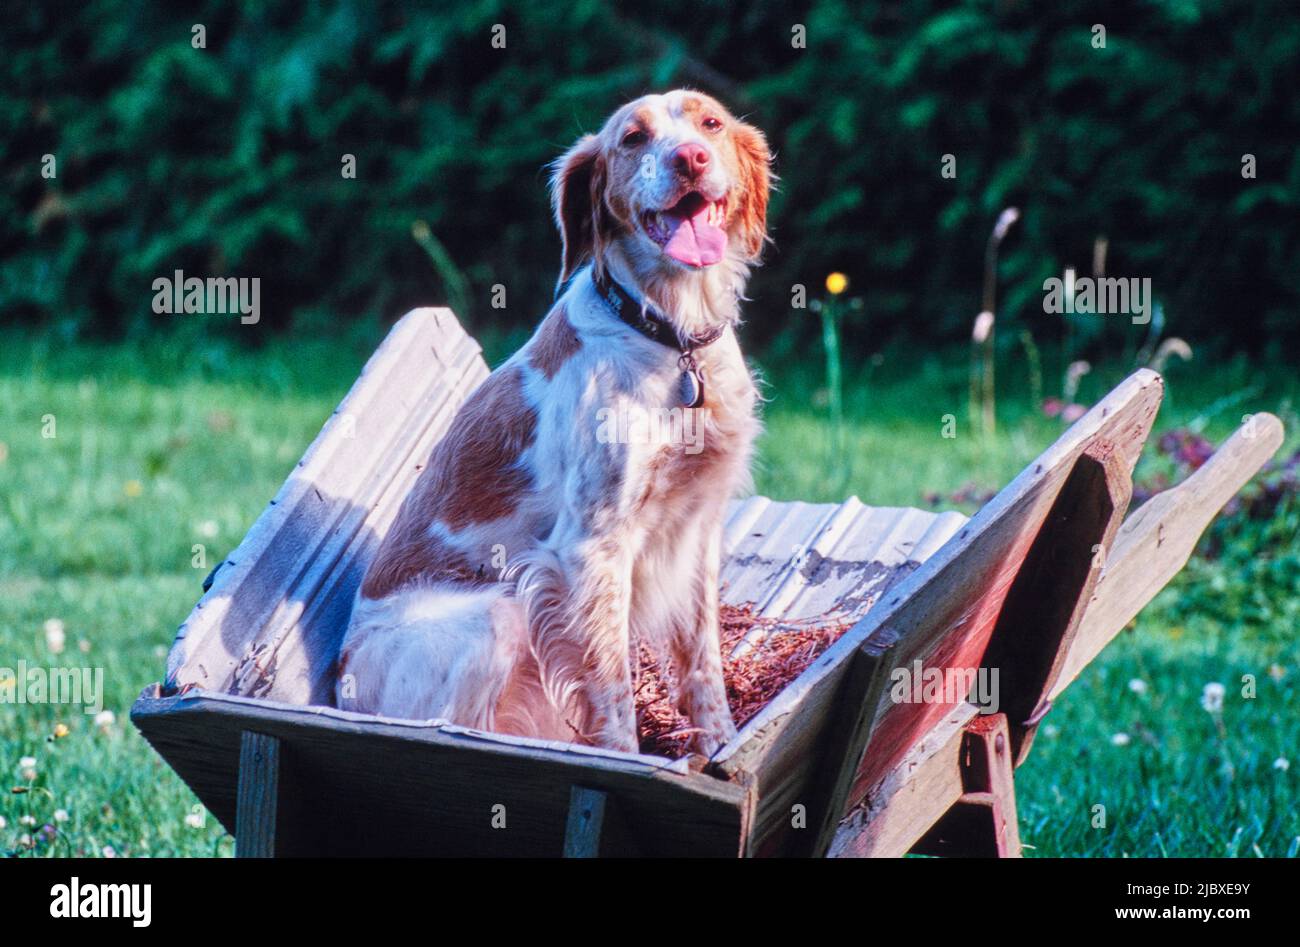 A Brittany dog sitting in a wheelbarrow Stock Photo